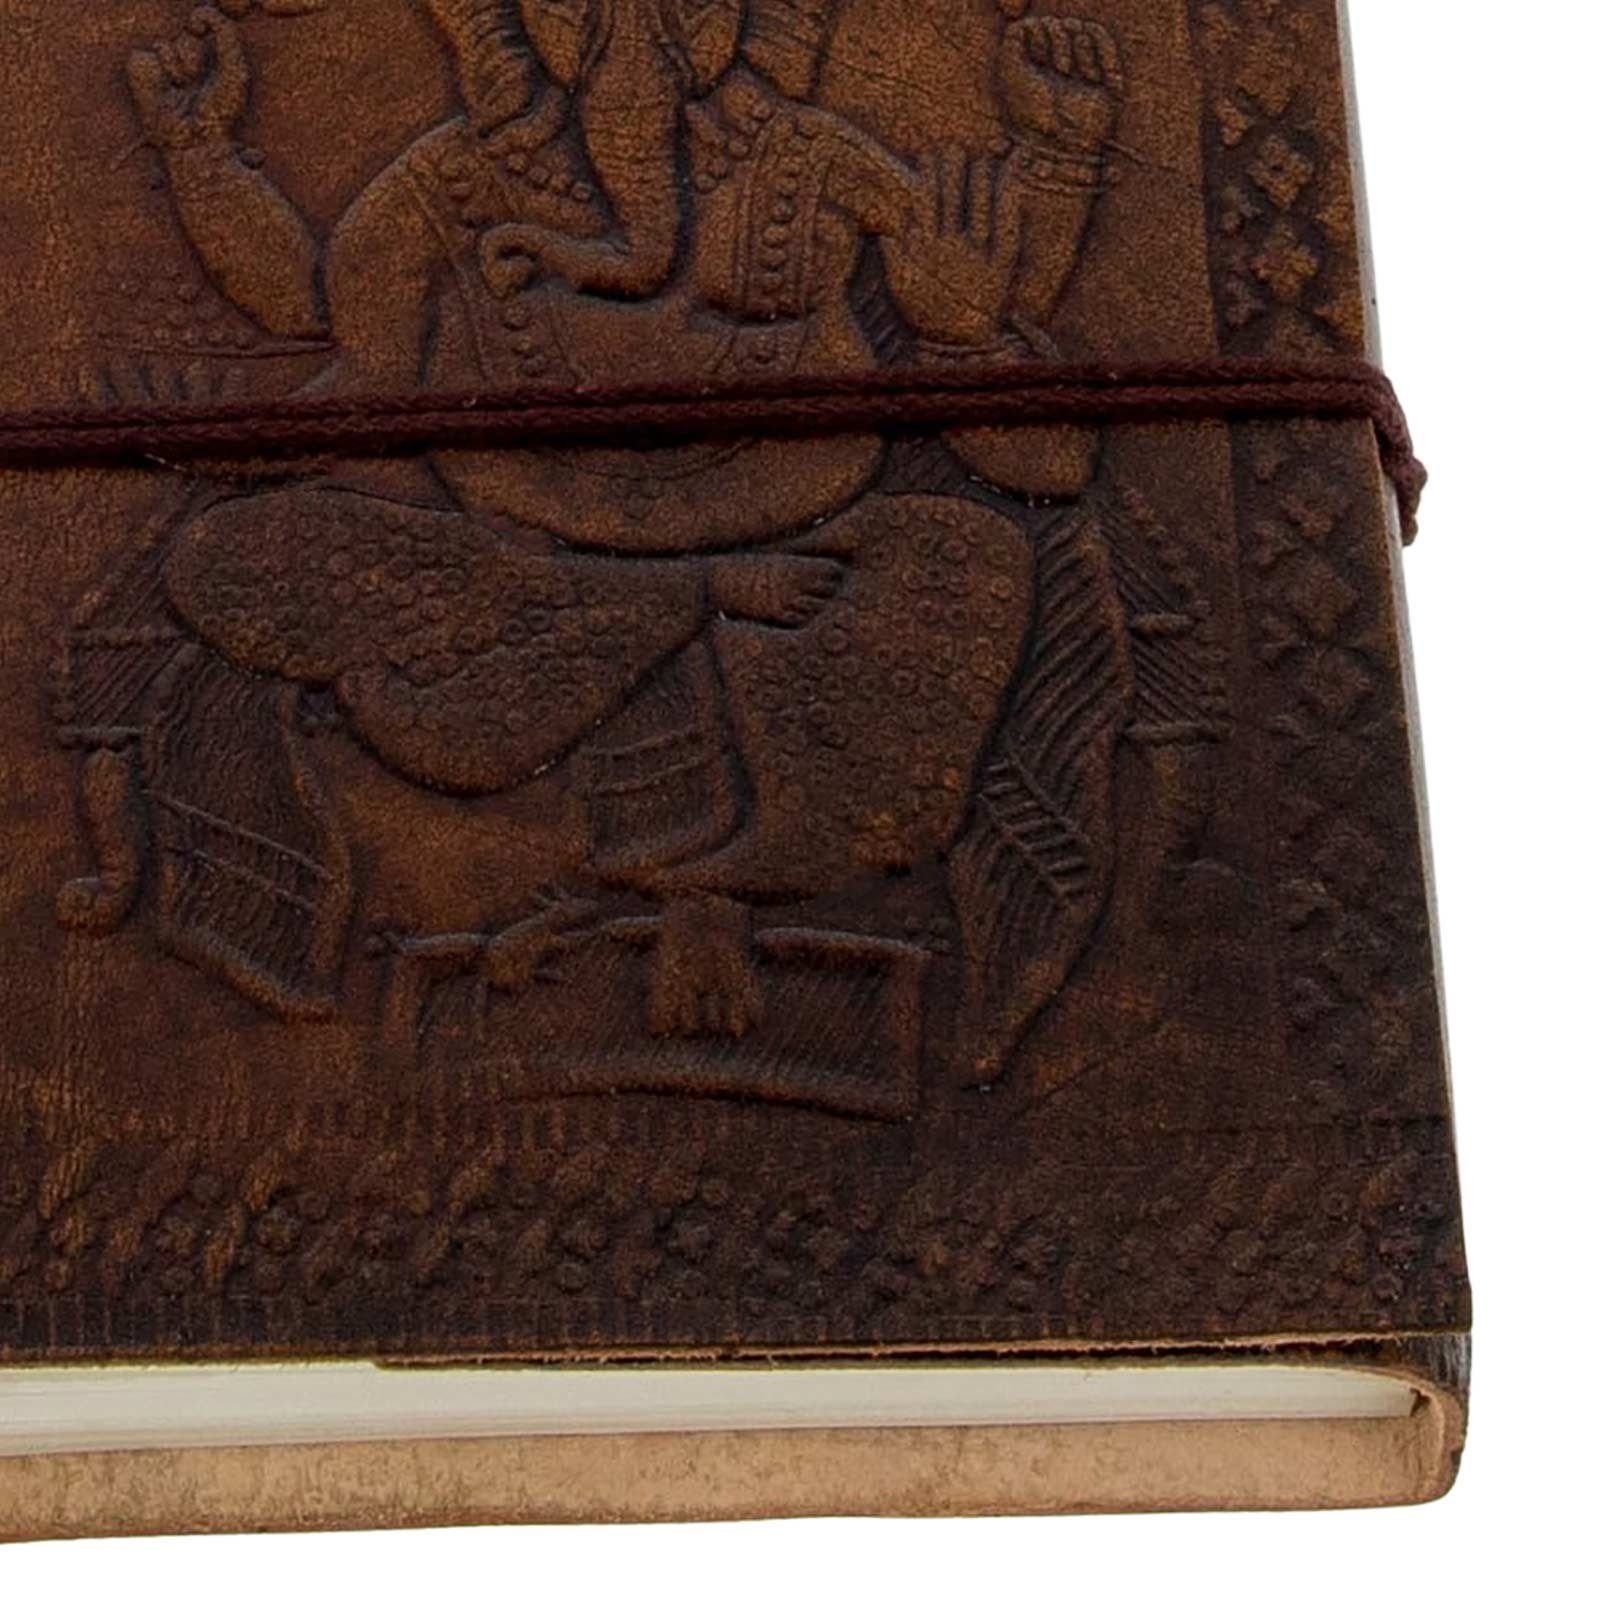 Tagebuch Notizbuch MAGIE Leder KUNST Ganesha UND Tagebuch 11,5x15cm handgefertigt Lord